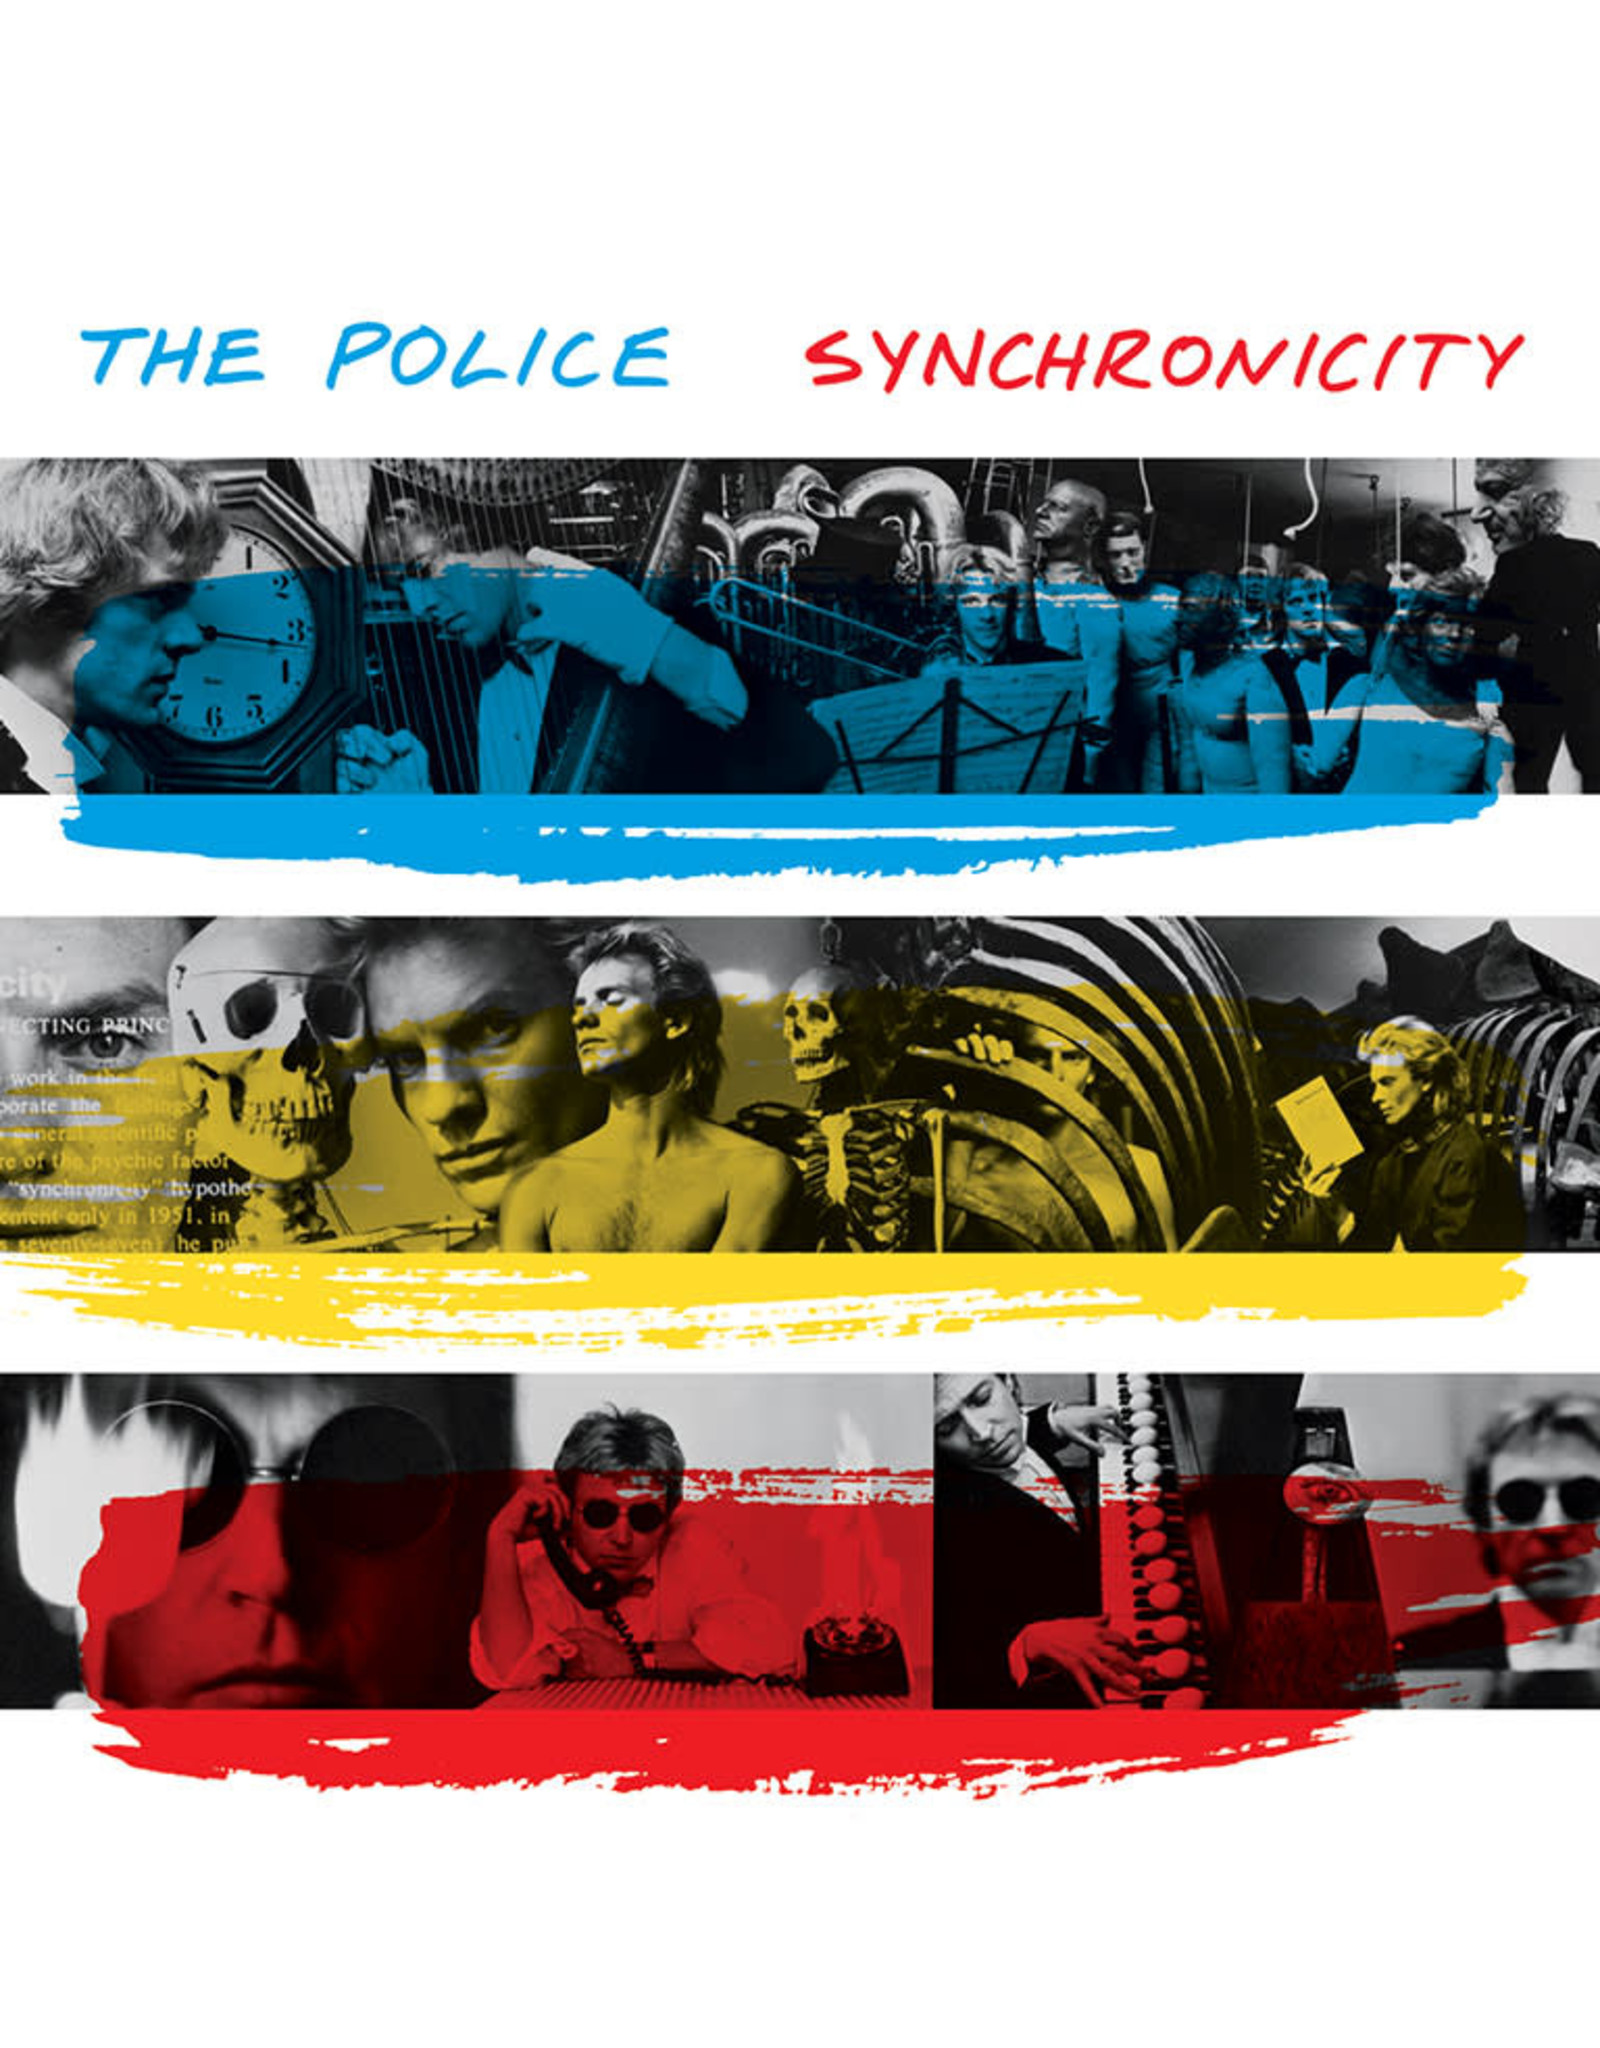 Police - Synchronicity CD